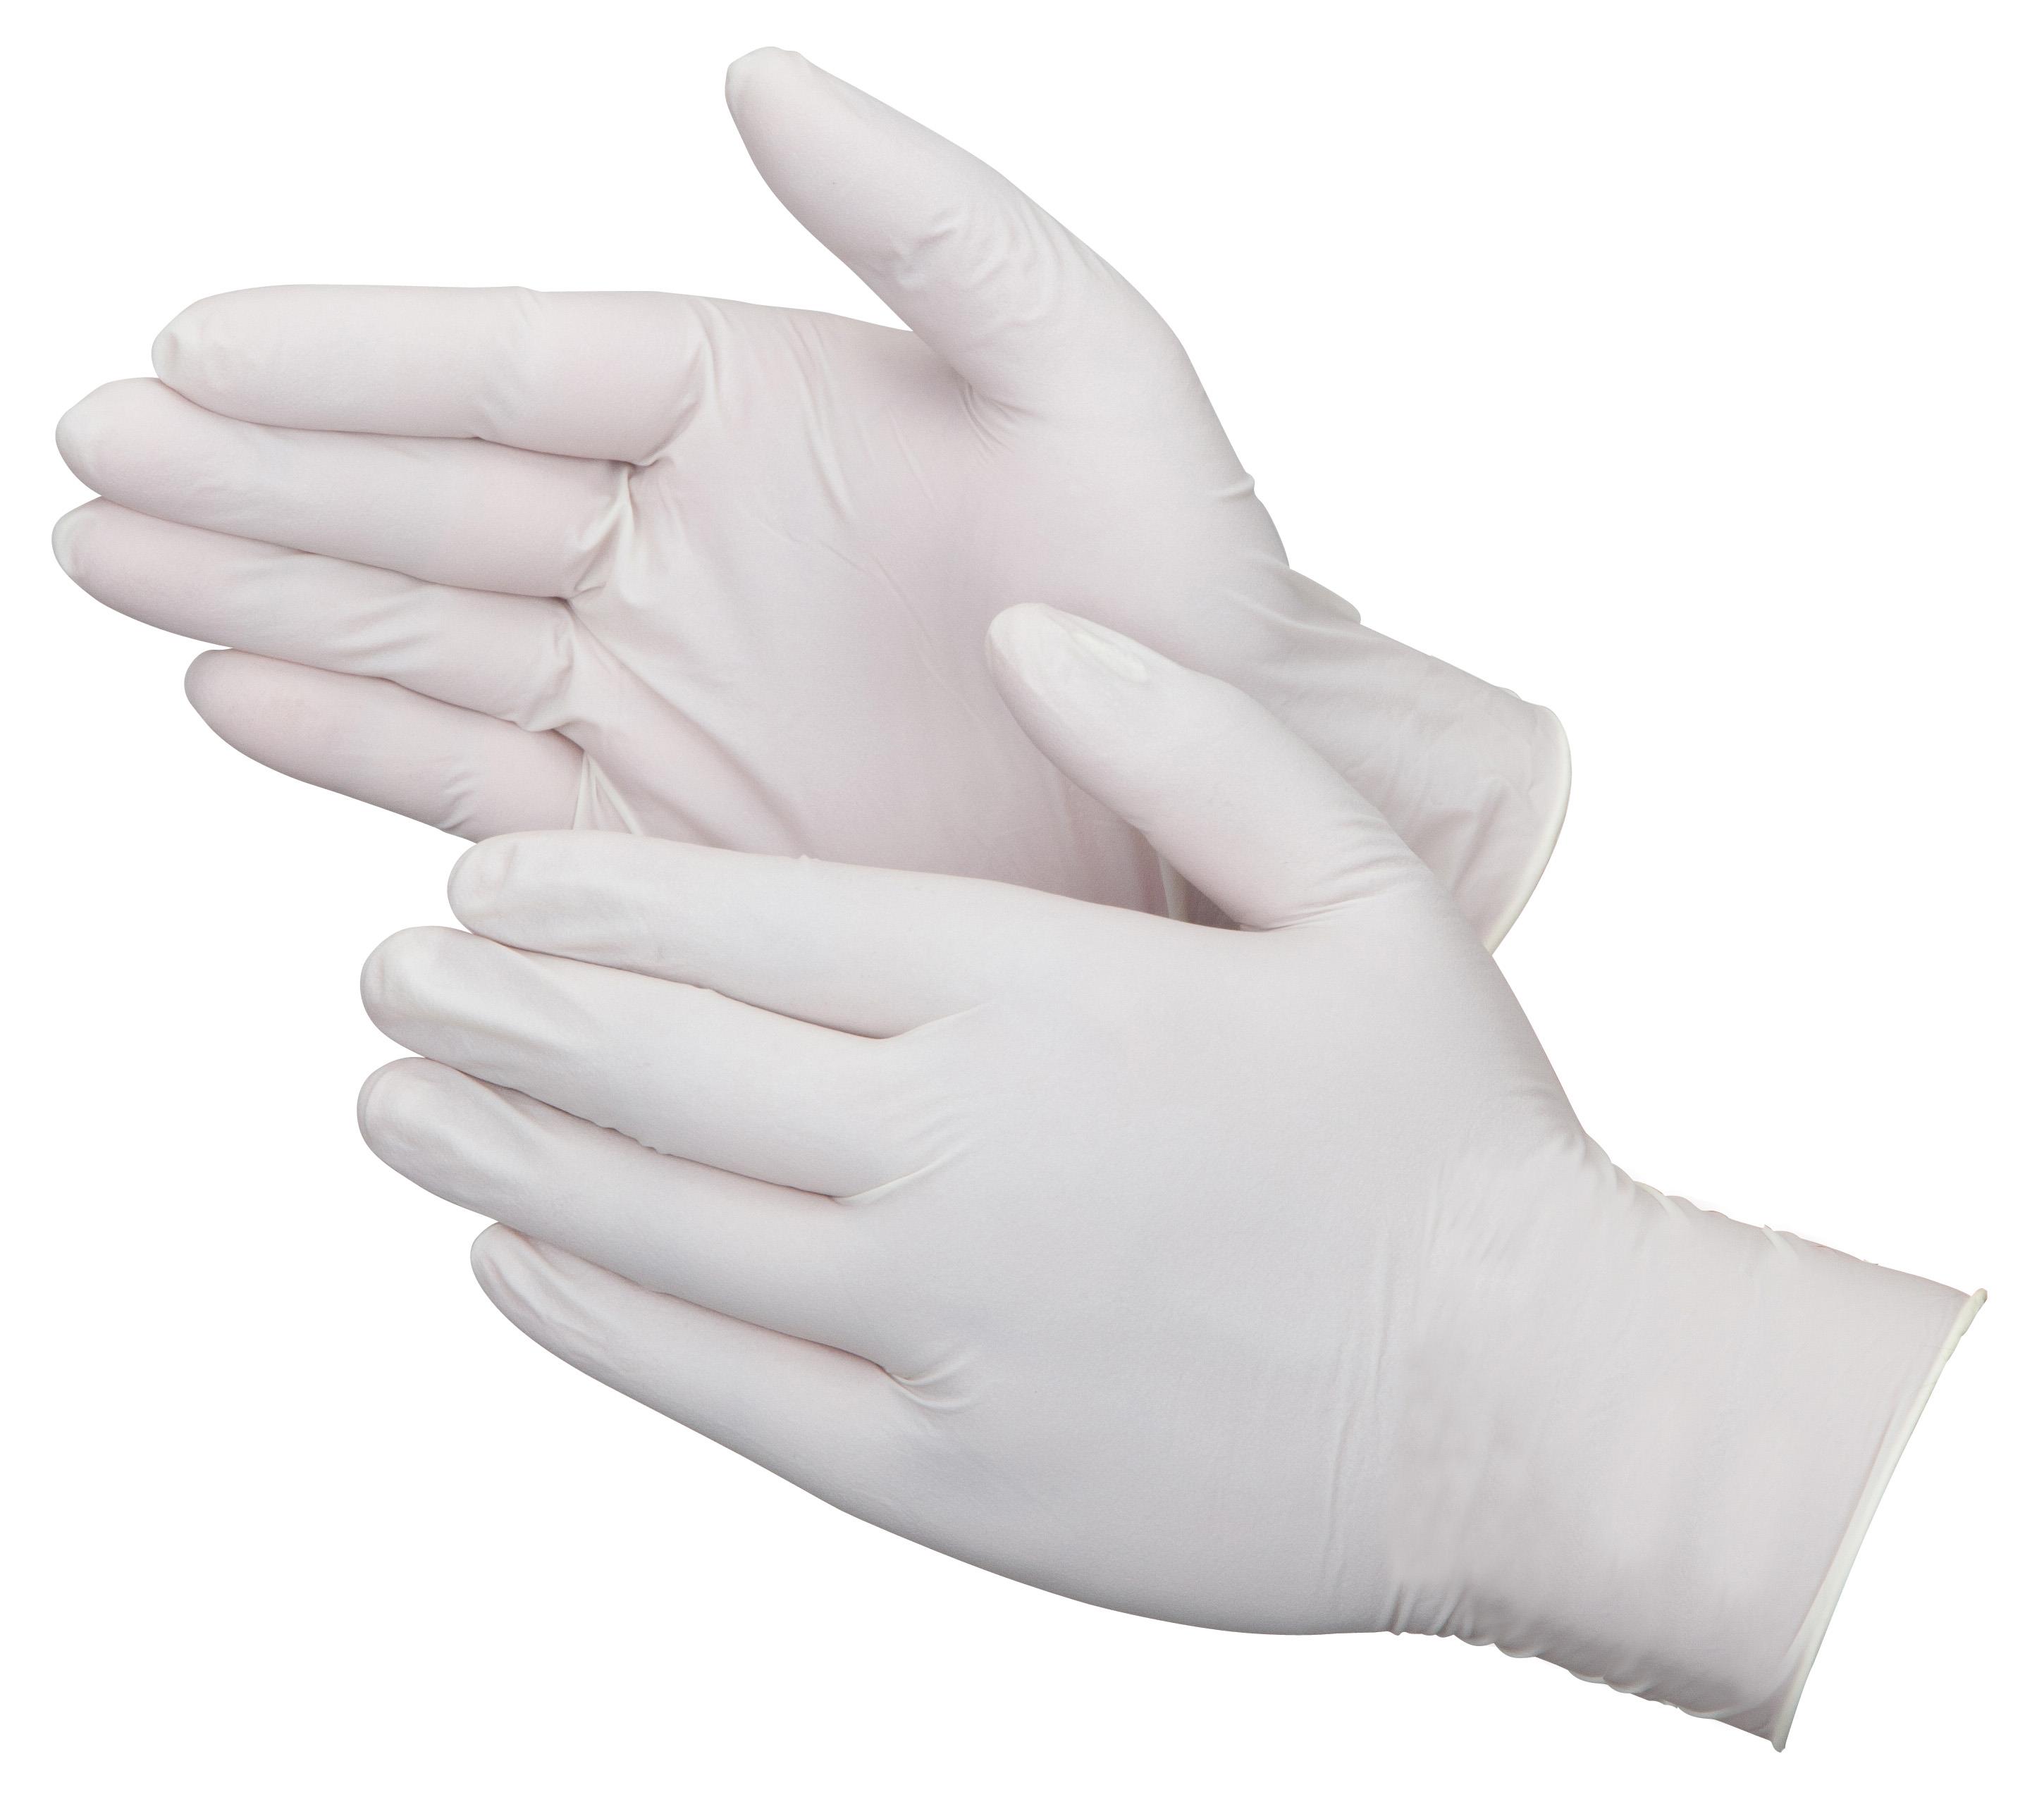 DURASKIN 3.5MIL POWDER FREE LATEX 100/BX - Disposable Gloves